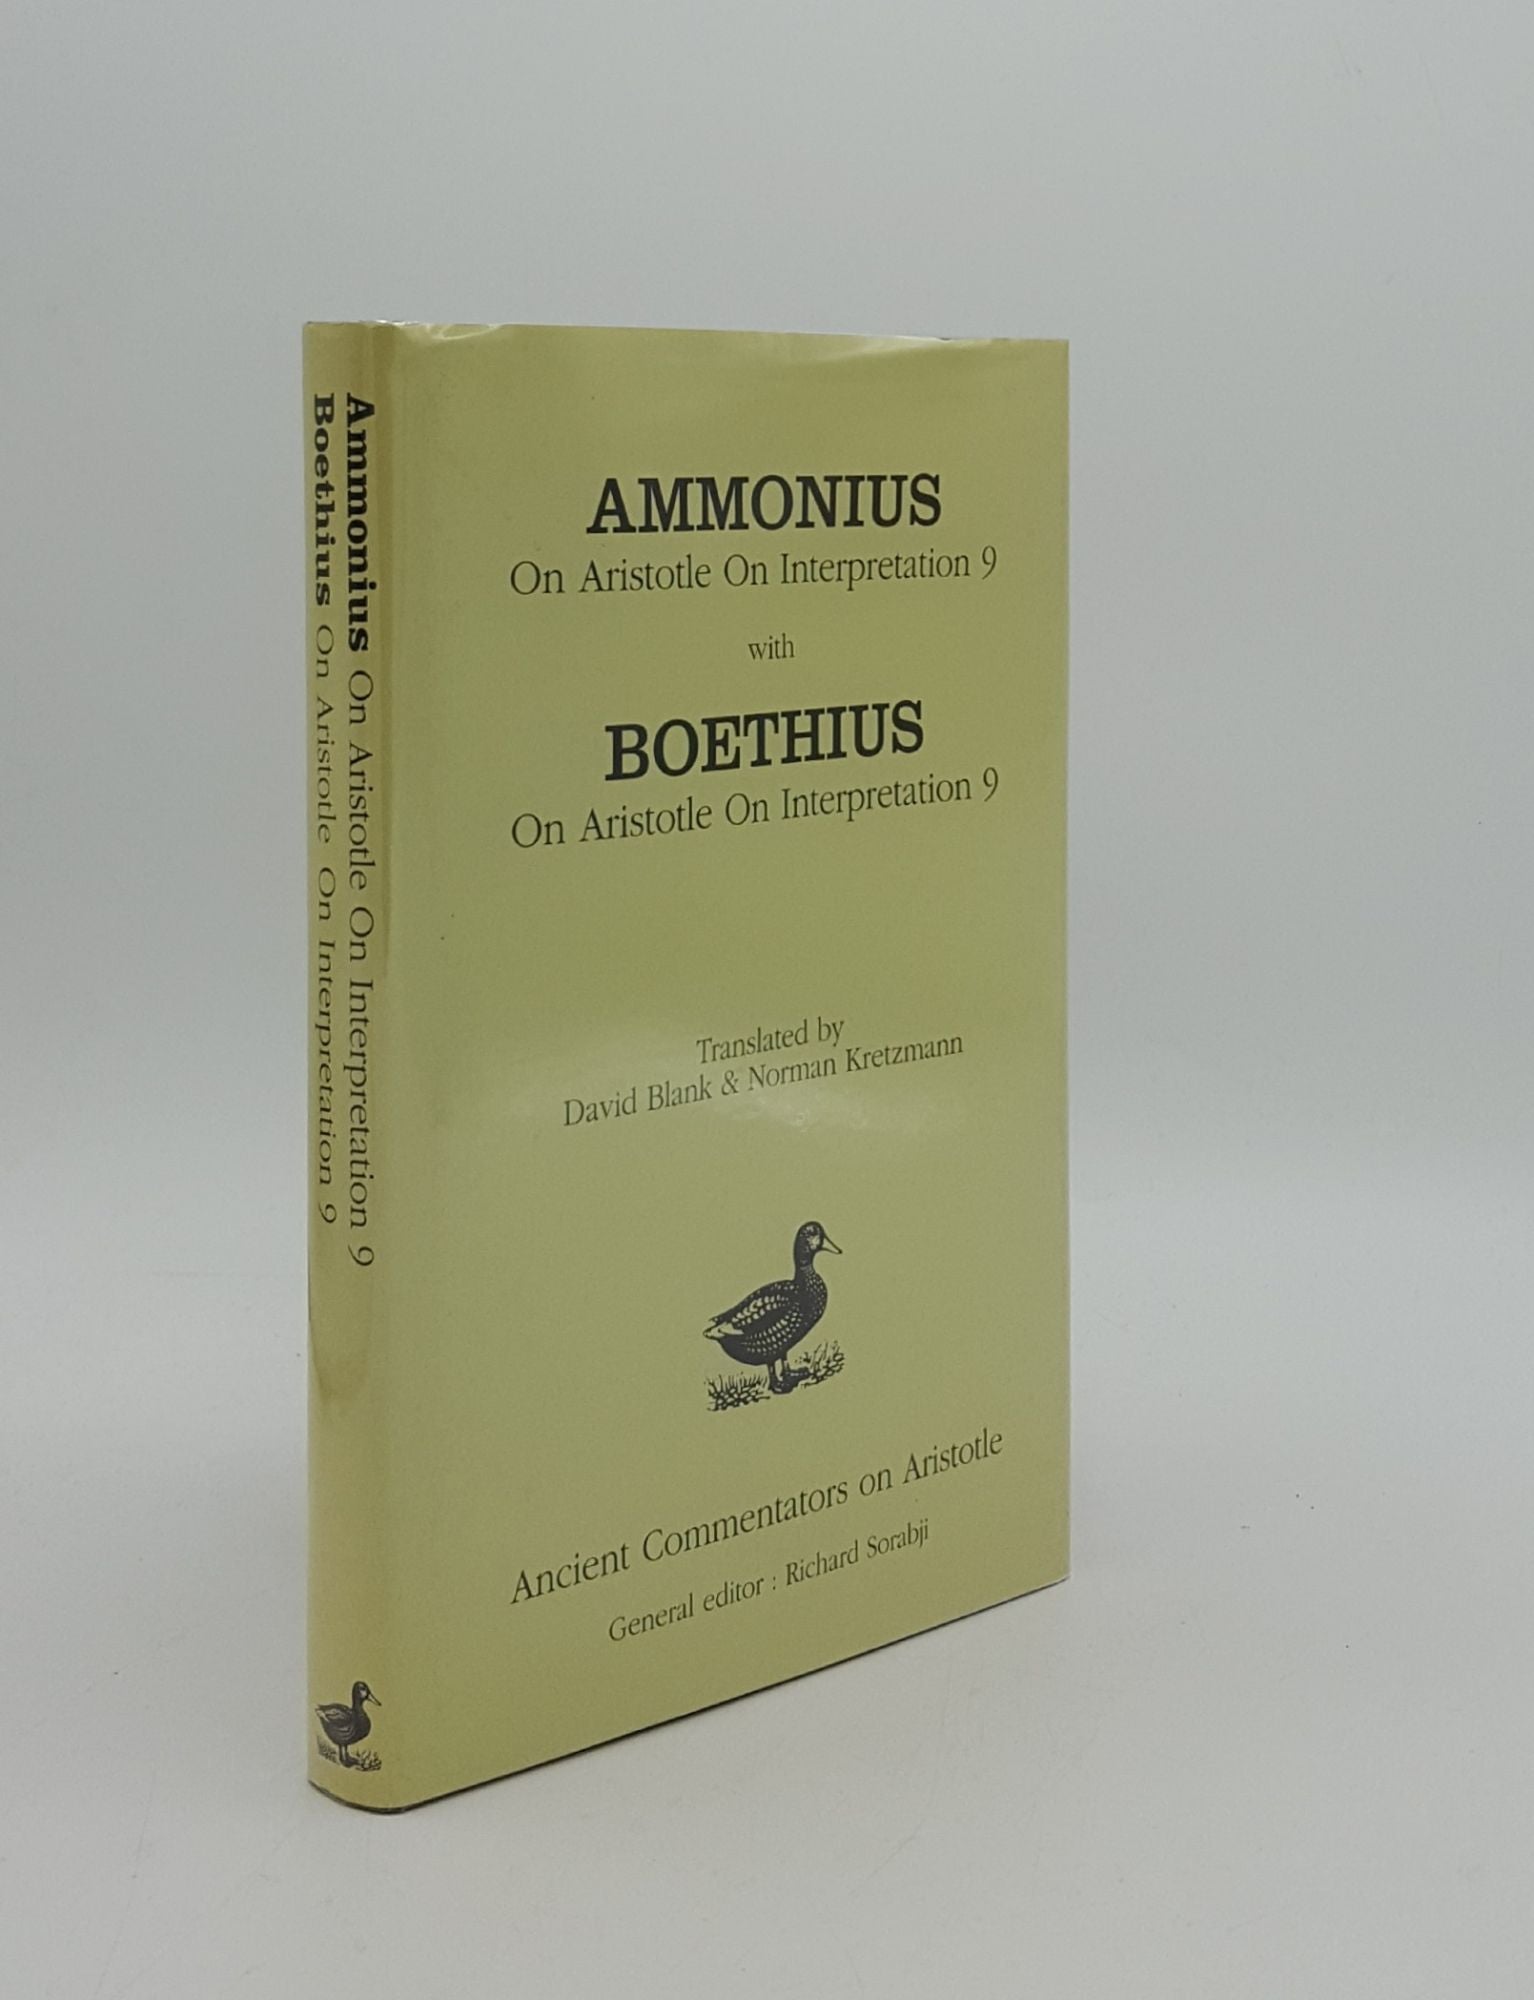 AMMONIUS, BOETHIUS, BLANK David, KRETZMAN Norman - Ammonius on Aristotle on Interpretation 9 with Boethius on Aristotle on Interpretation 9